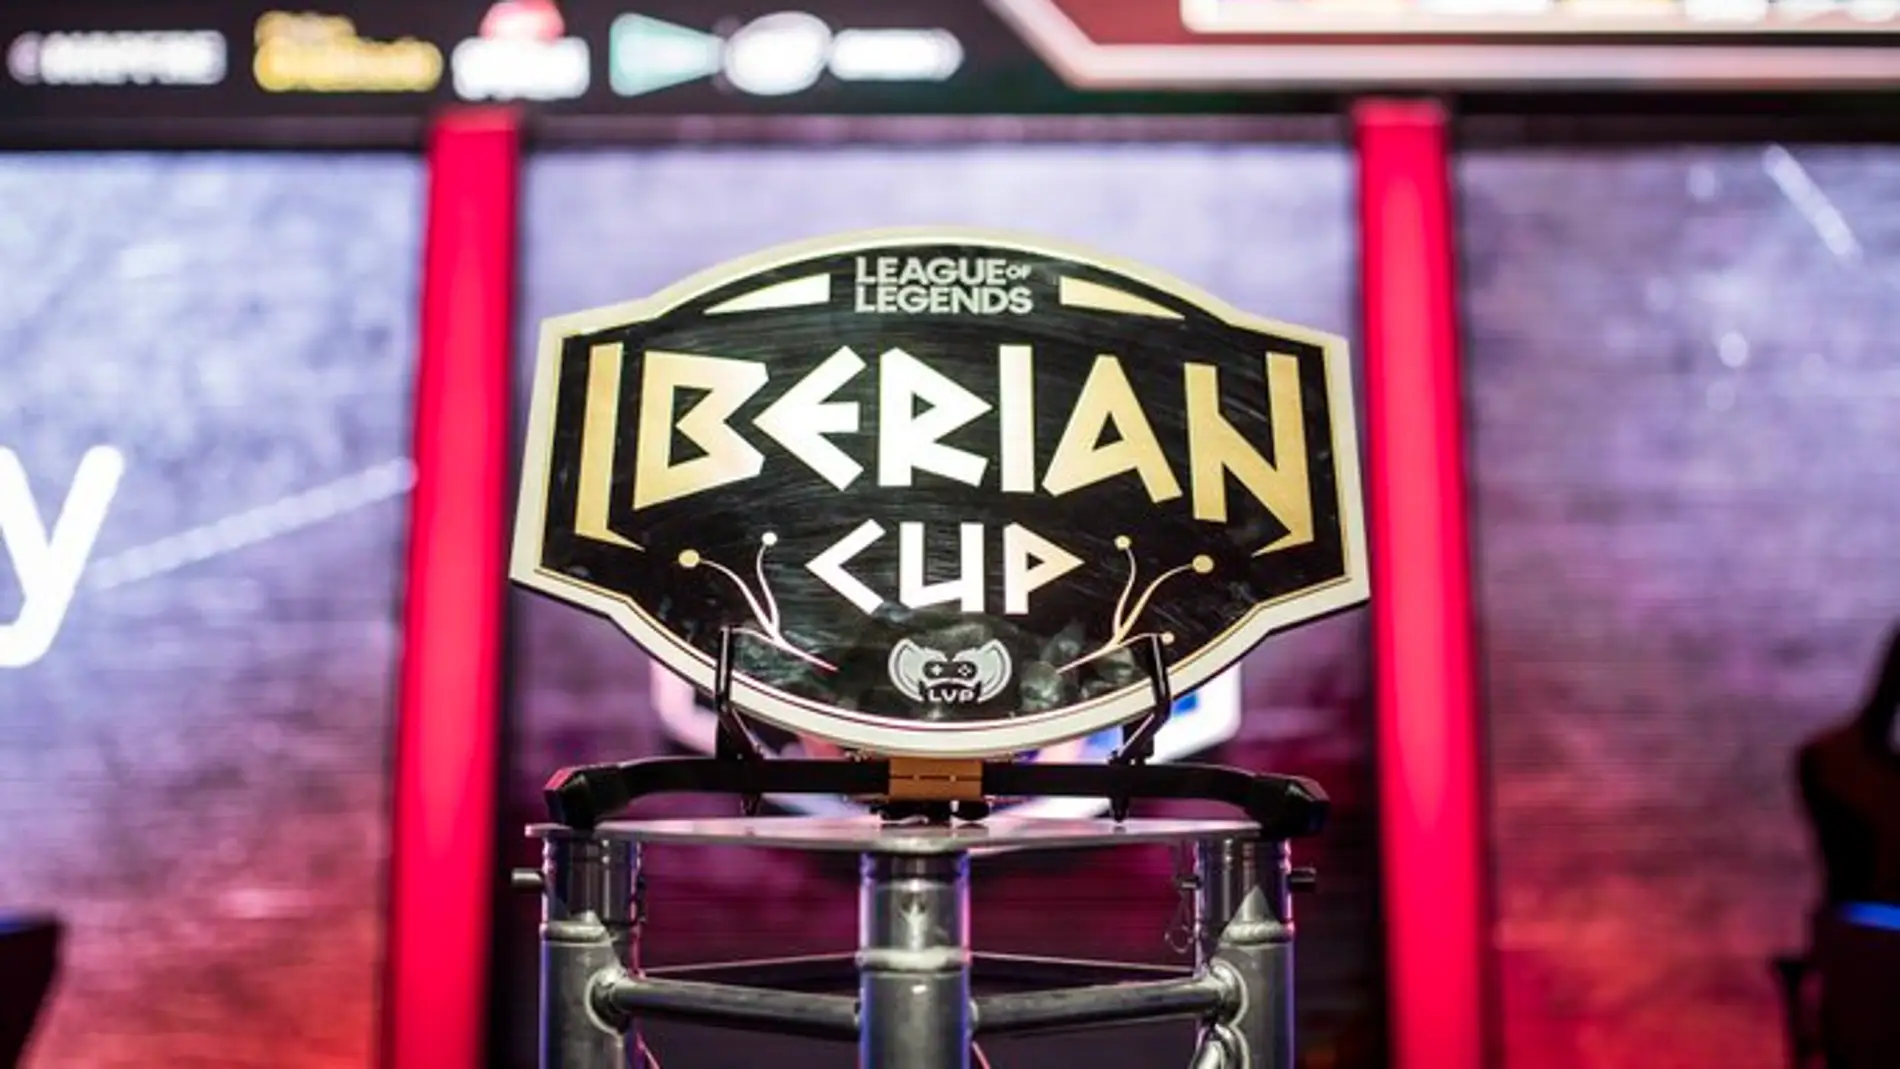 Iberian Cup - League of Legends